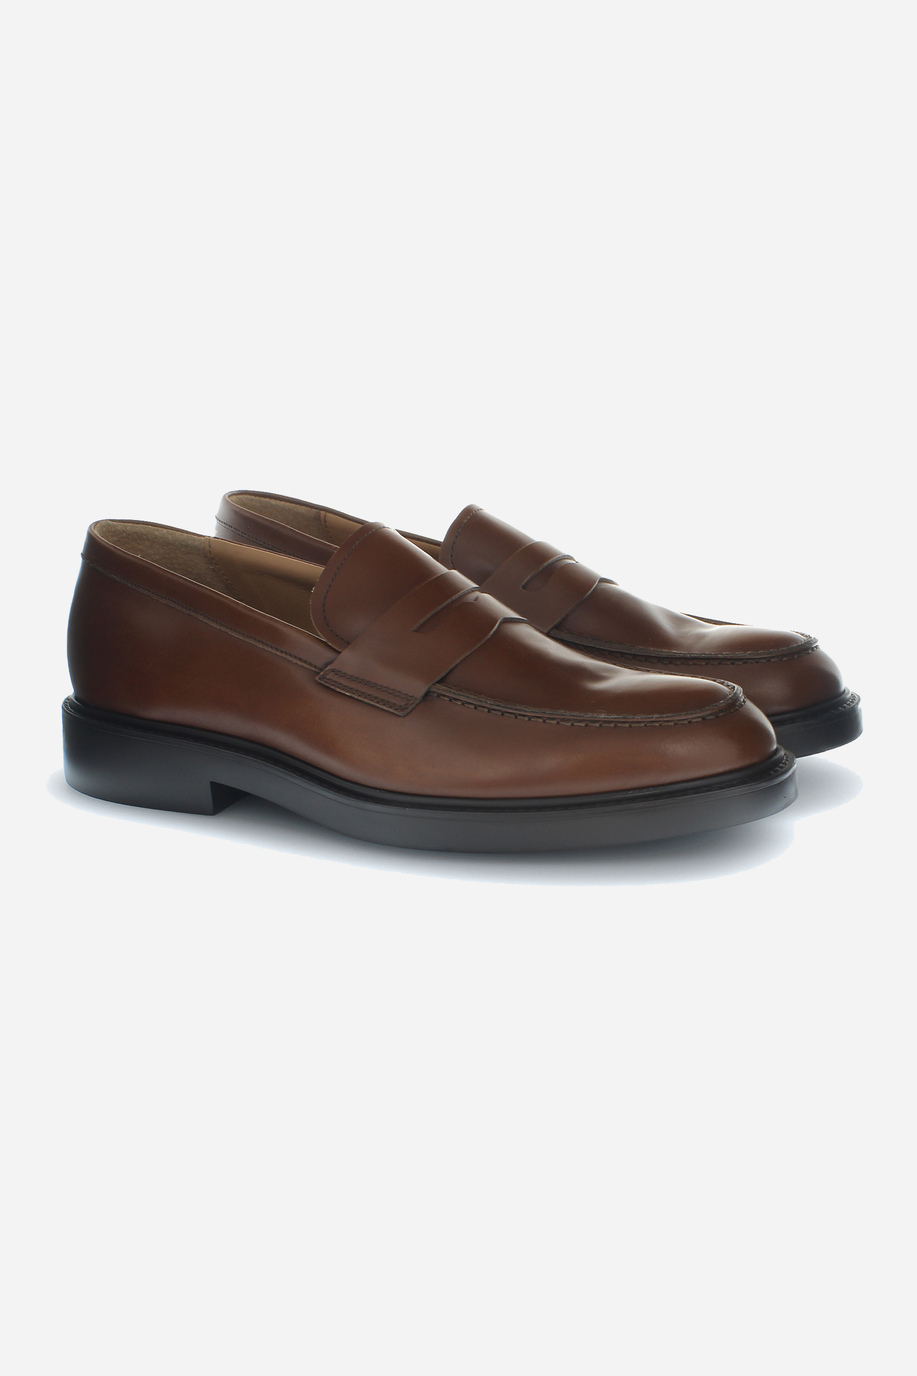 Mokassin aus Leder - Elegante Schuhe | La Martina - Official Online Shop